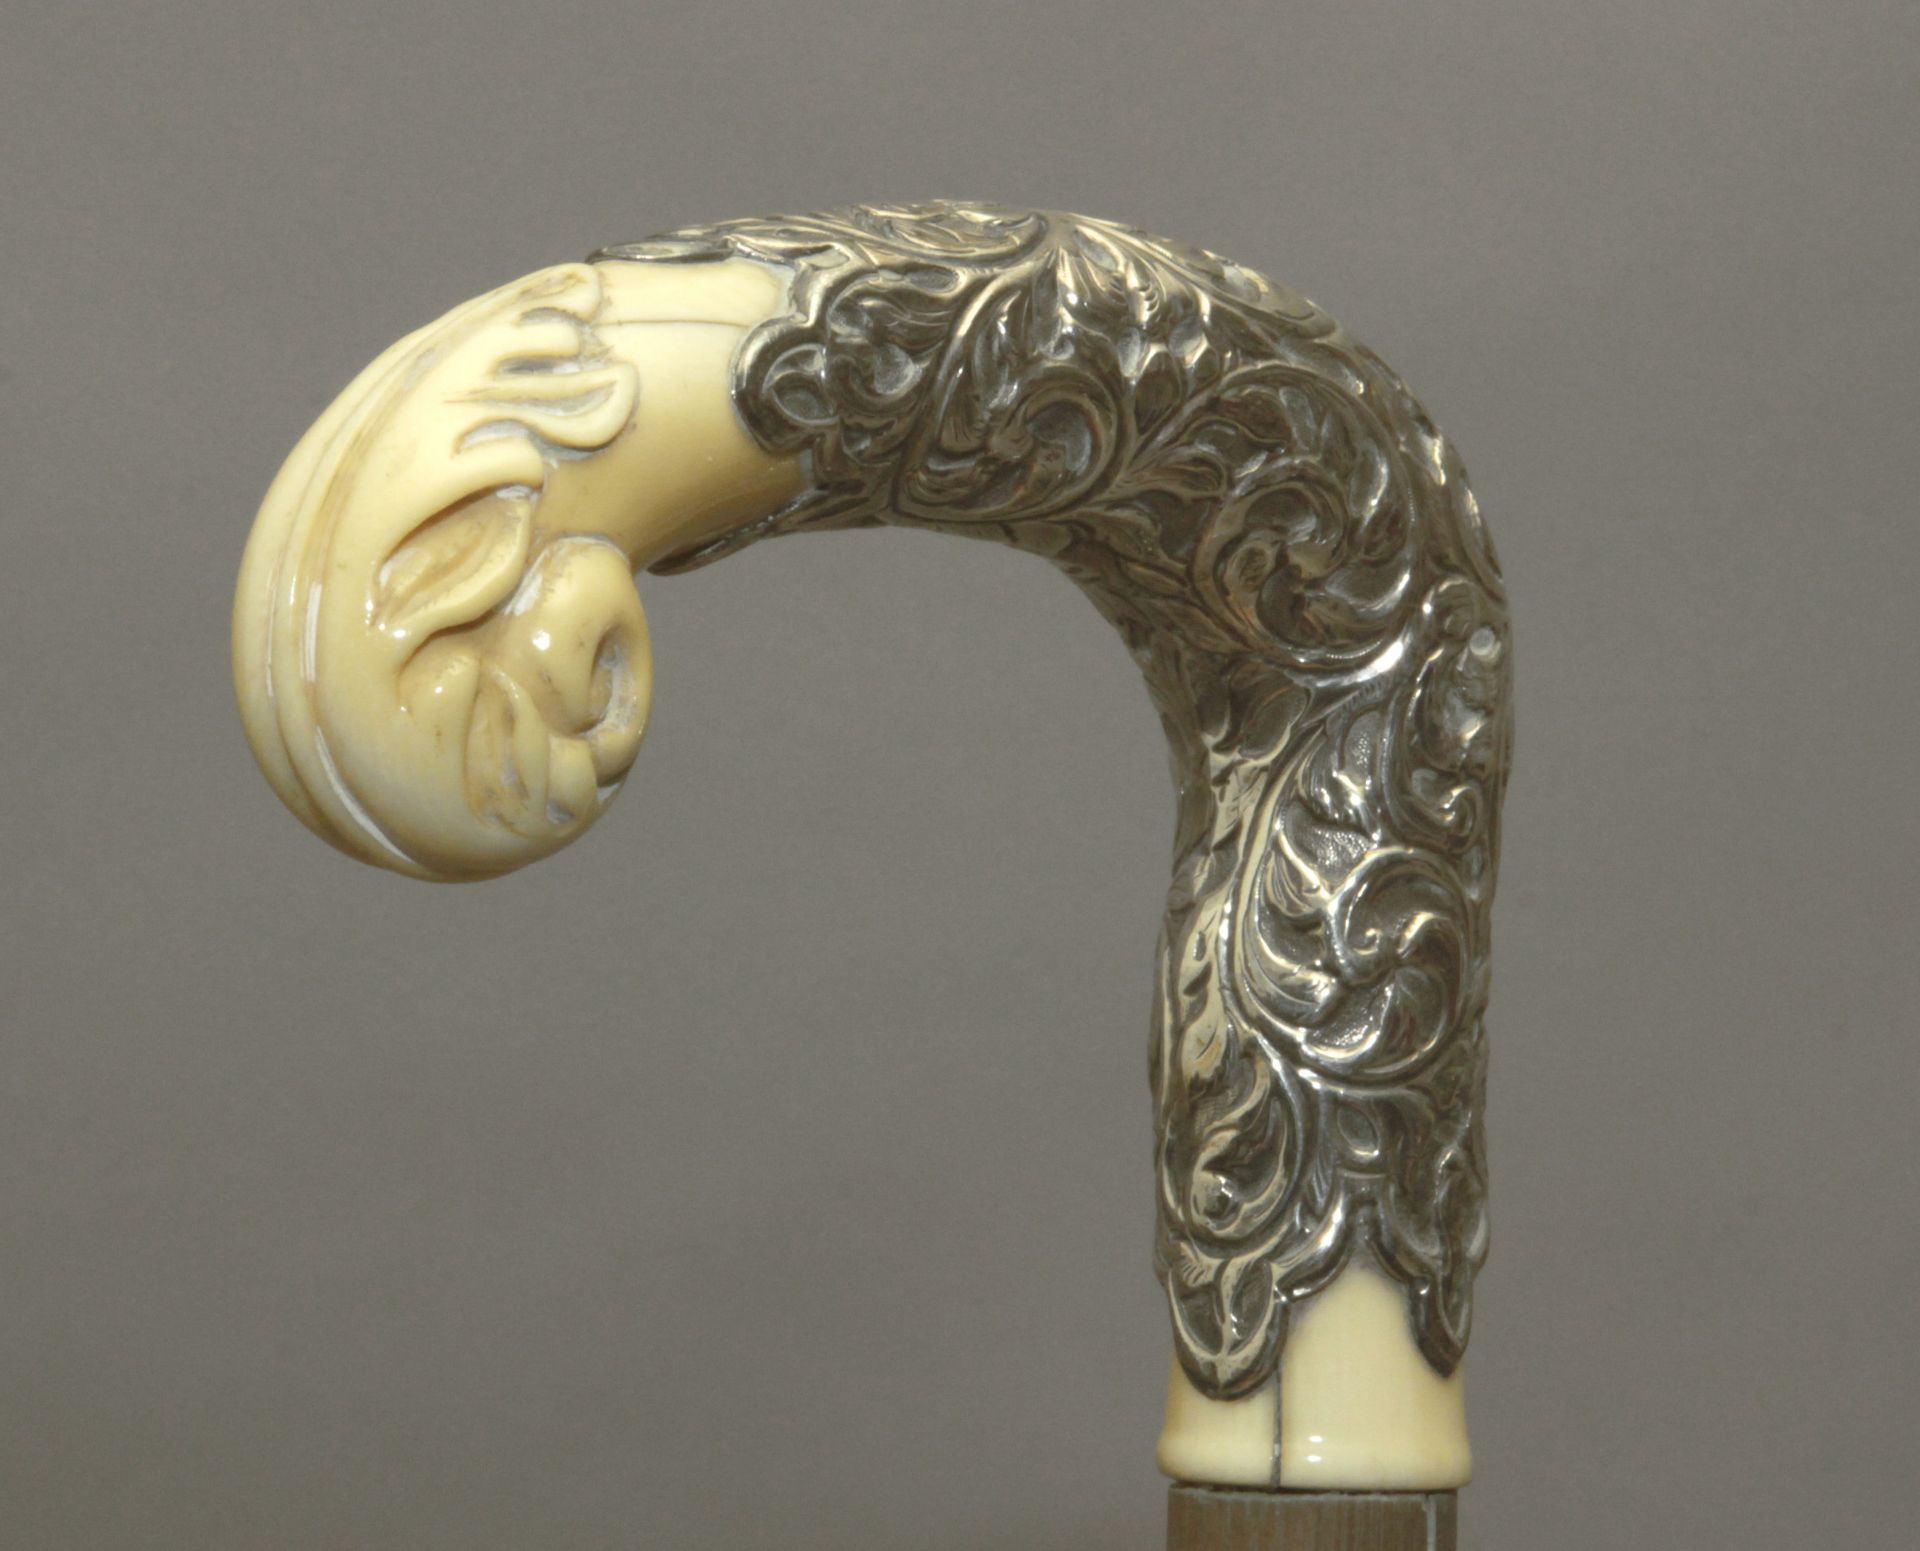 An ivory handled dress cane circa 1900